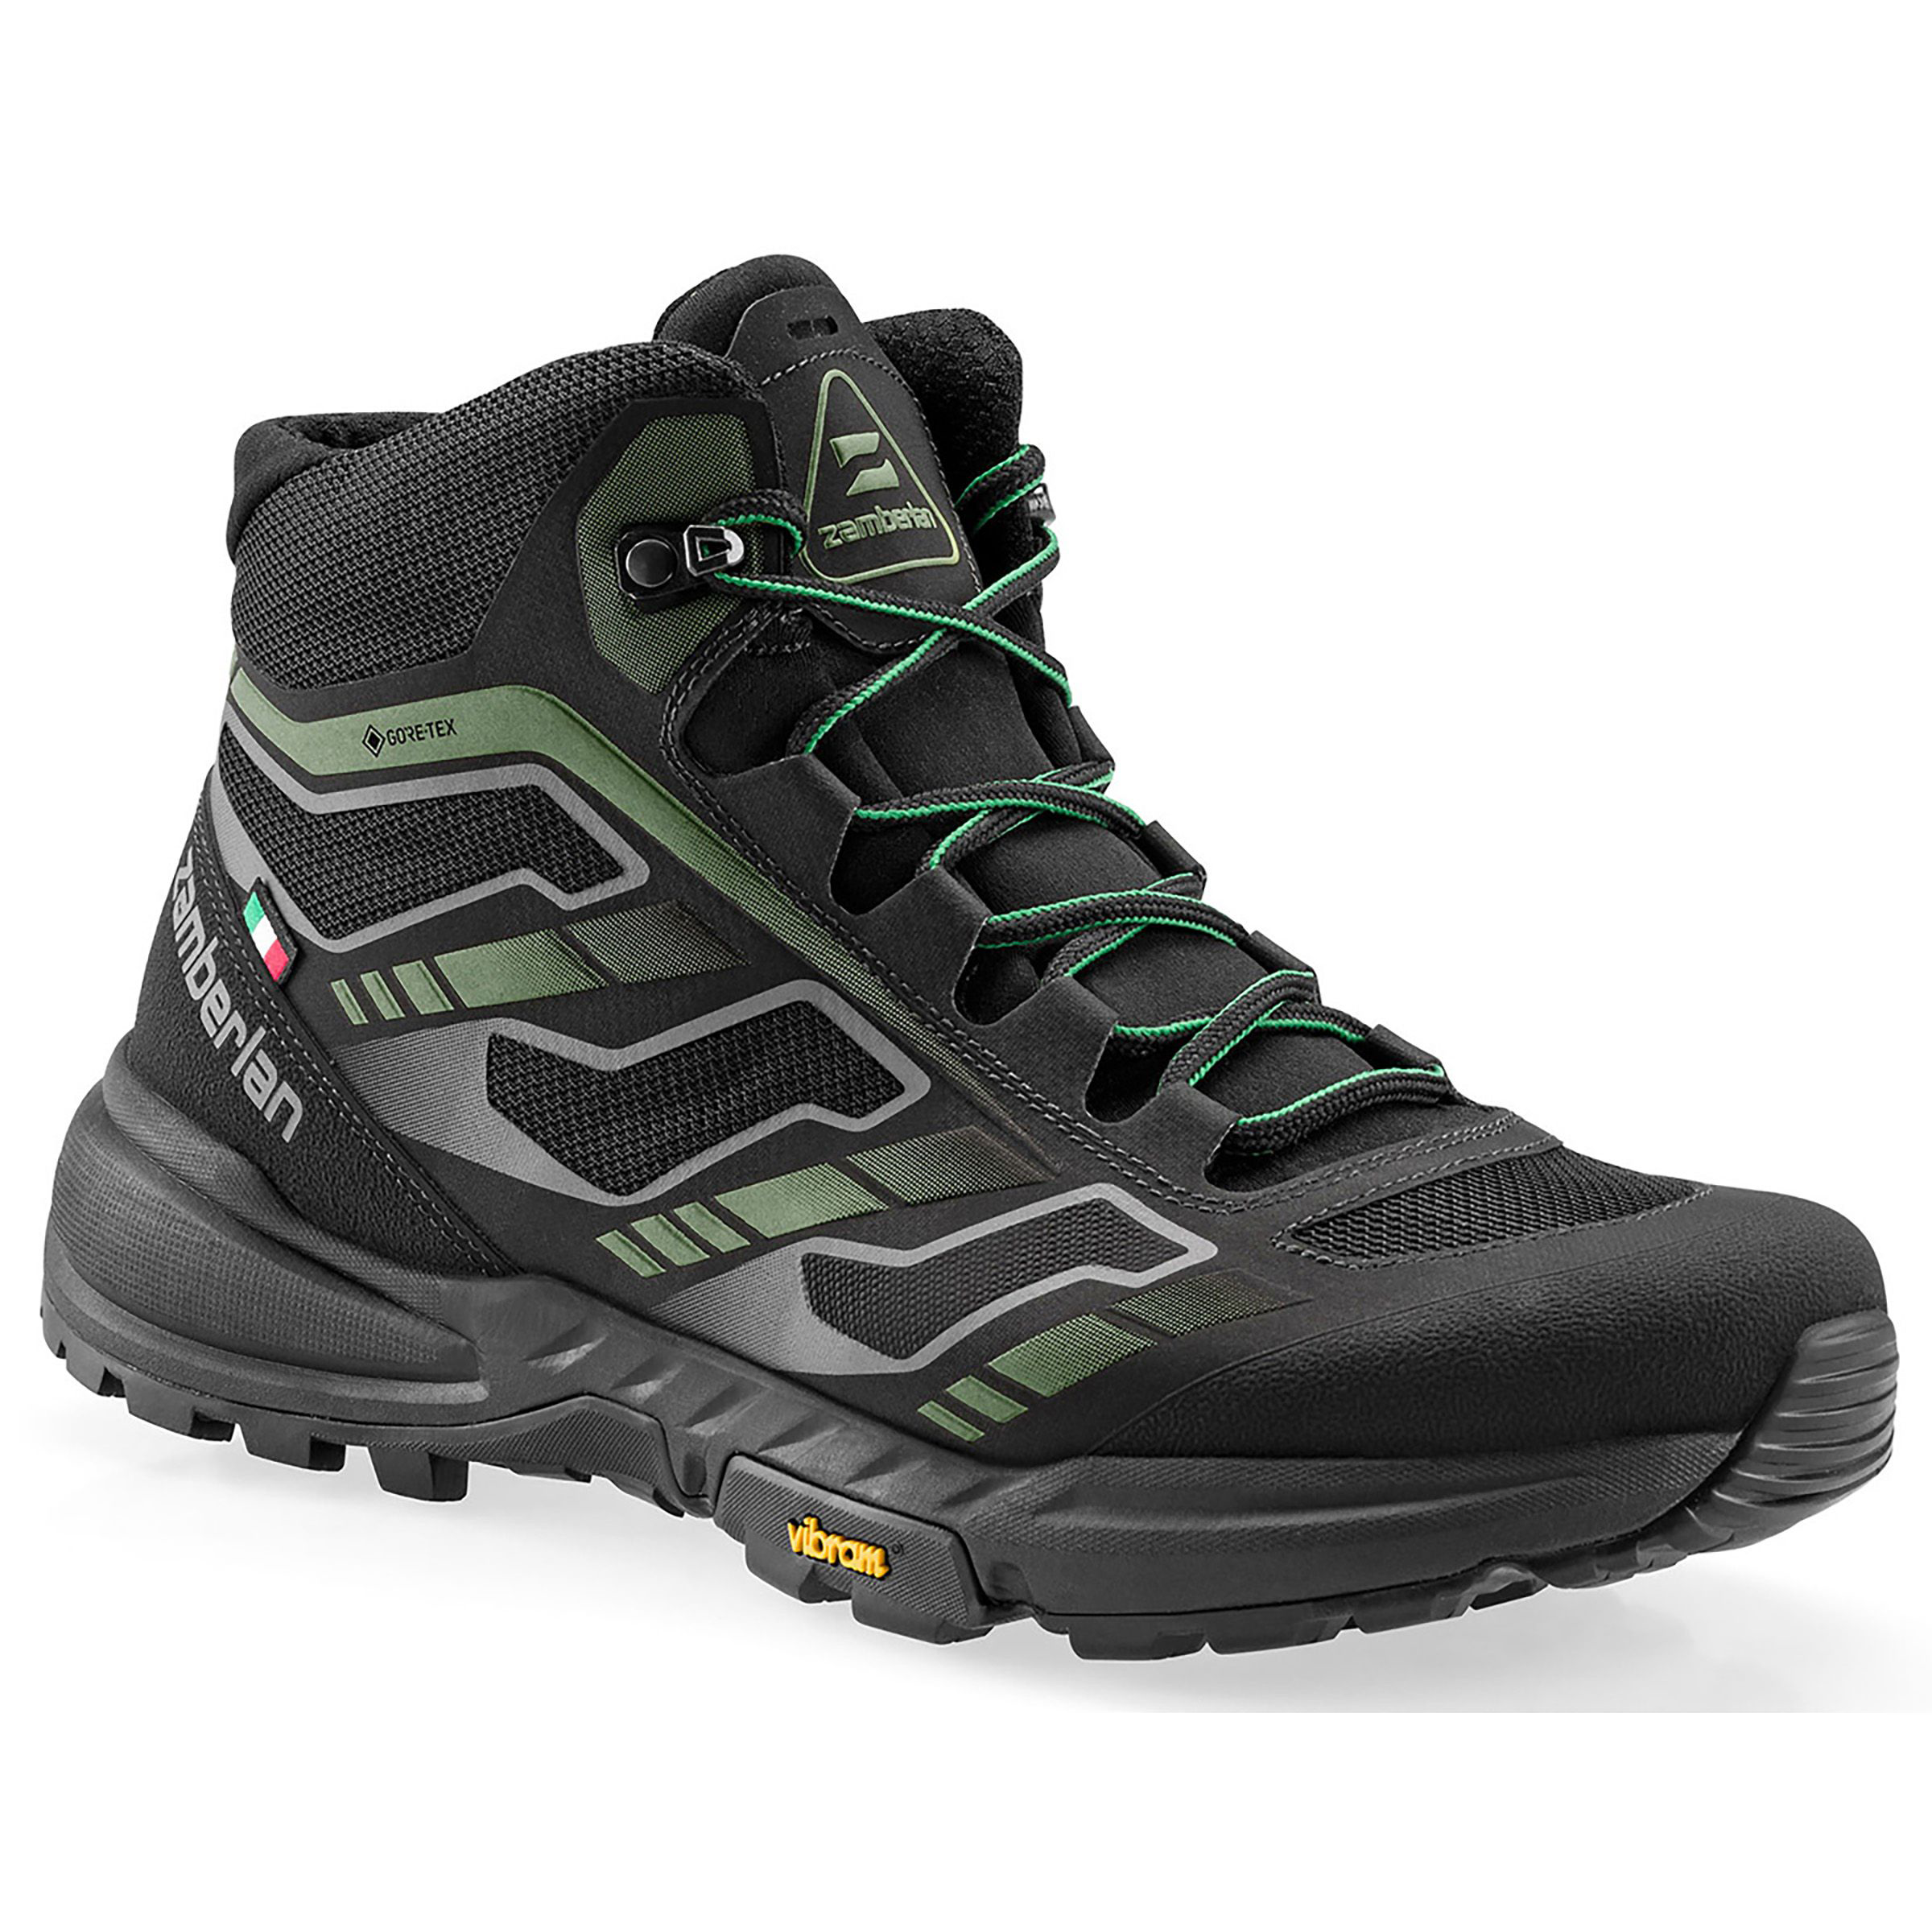 Zamberlan 219 Anabasis GTX Waterproof Mid Hiking Boots for Men - Dark Green - 8.5M